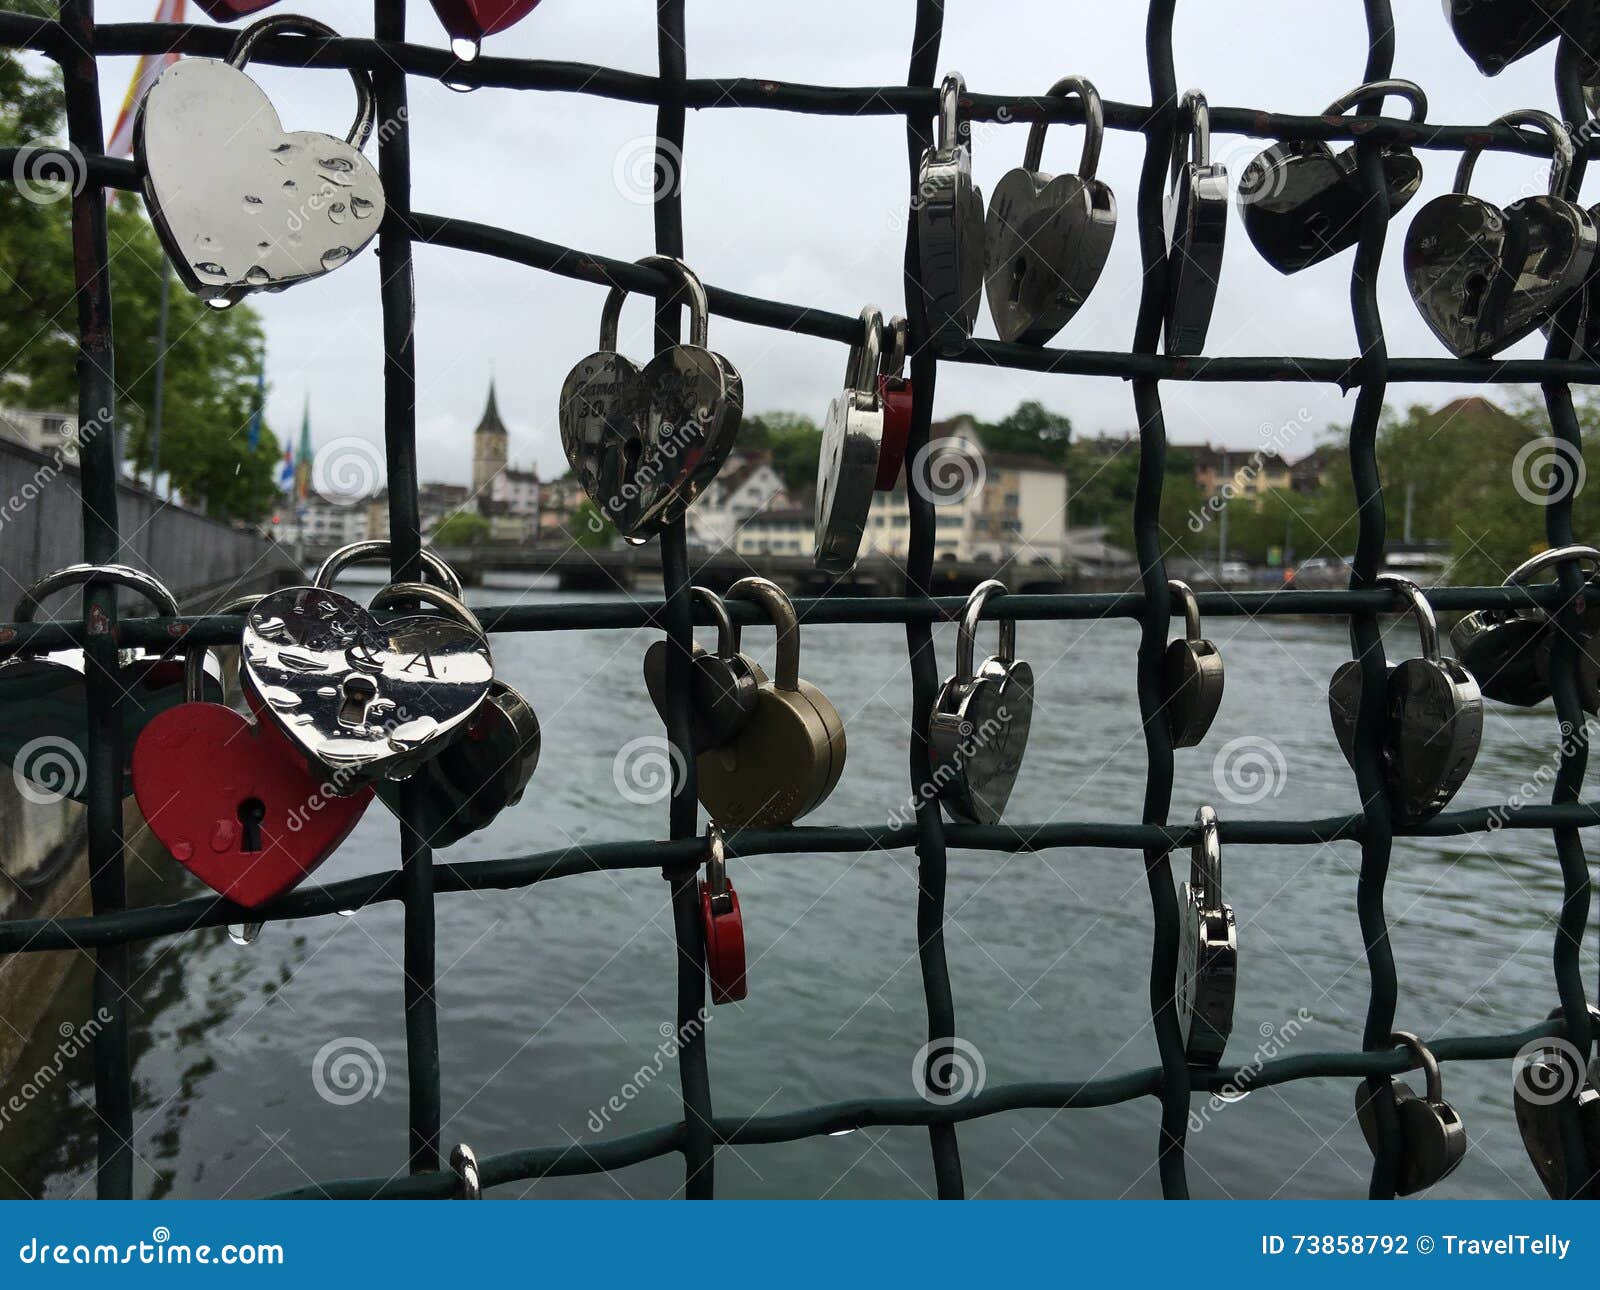 Love locks on a bridge stock photo. Image of bridge, europe - 73858792